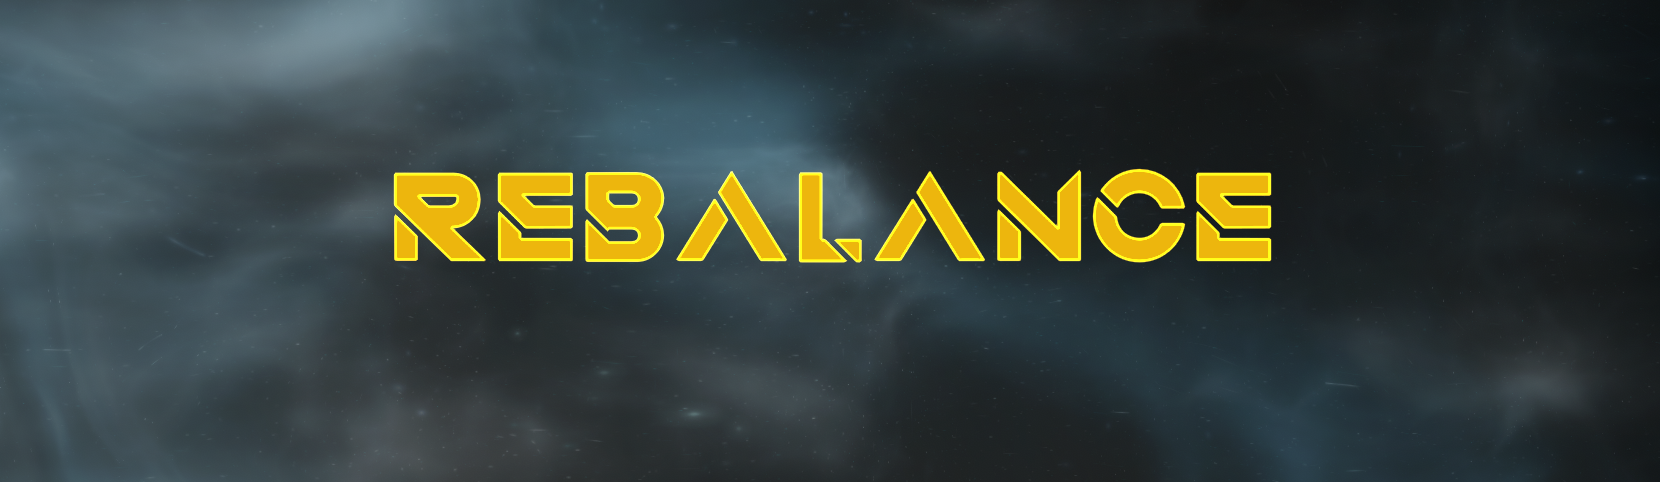 Rebalance Text Logo